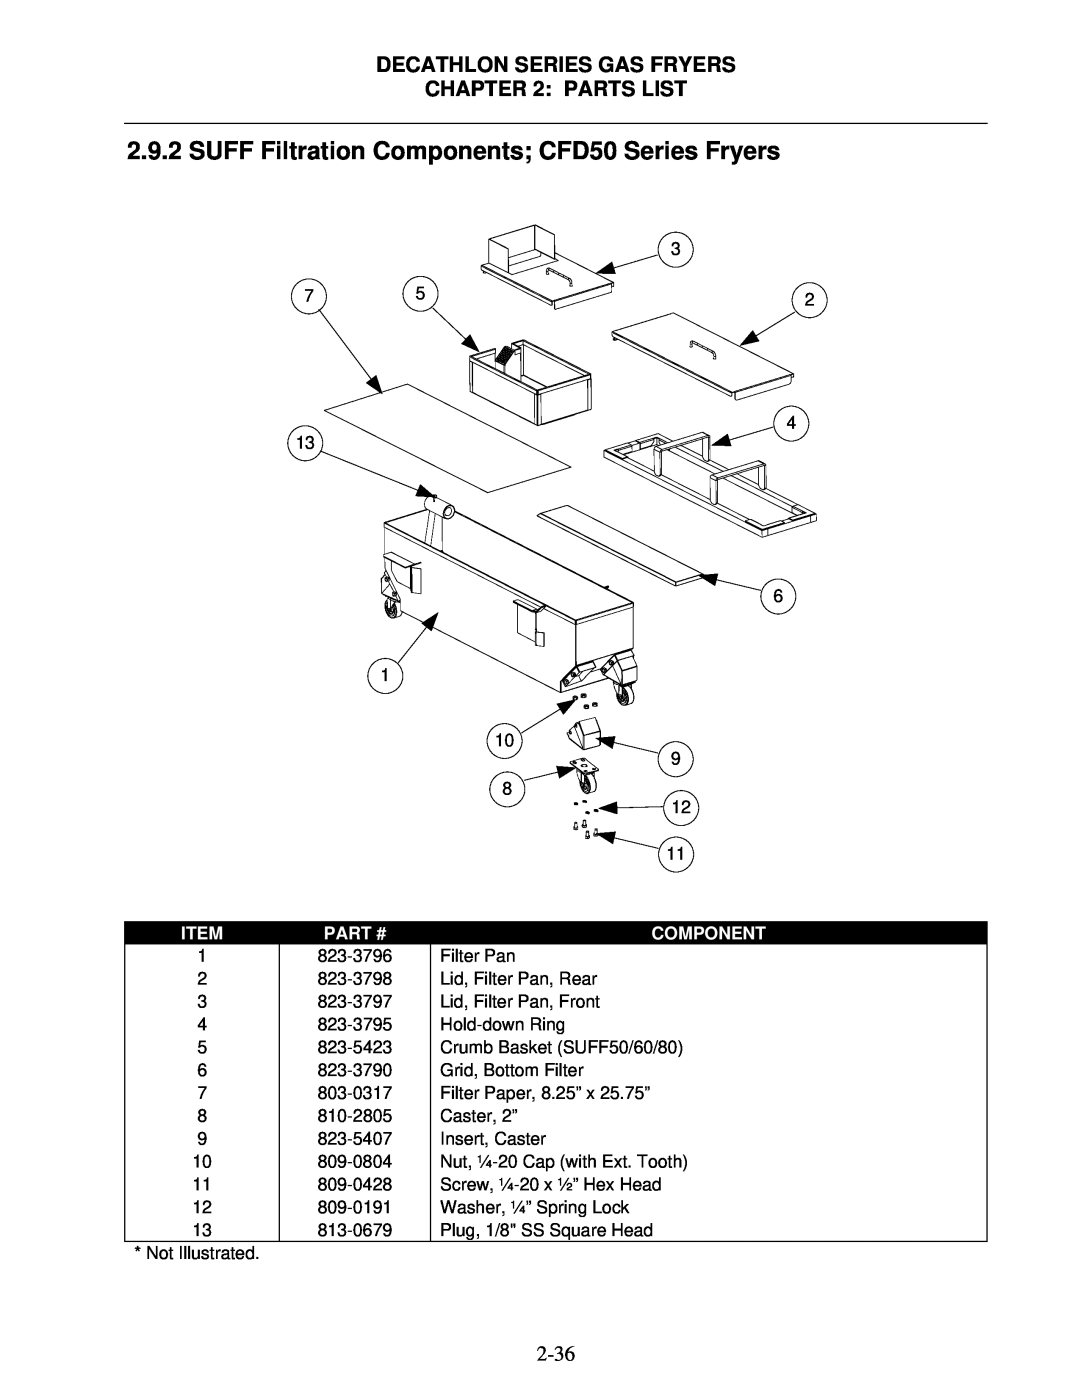 Frymaster FPD, SCFD manual Decathlon Series Gas Fryers : Parts List, 4 13 6 1 10 9 8 12 11, Item, Part #, Component 